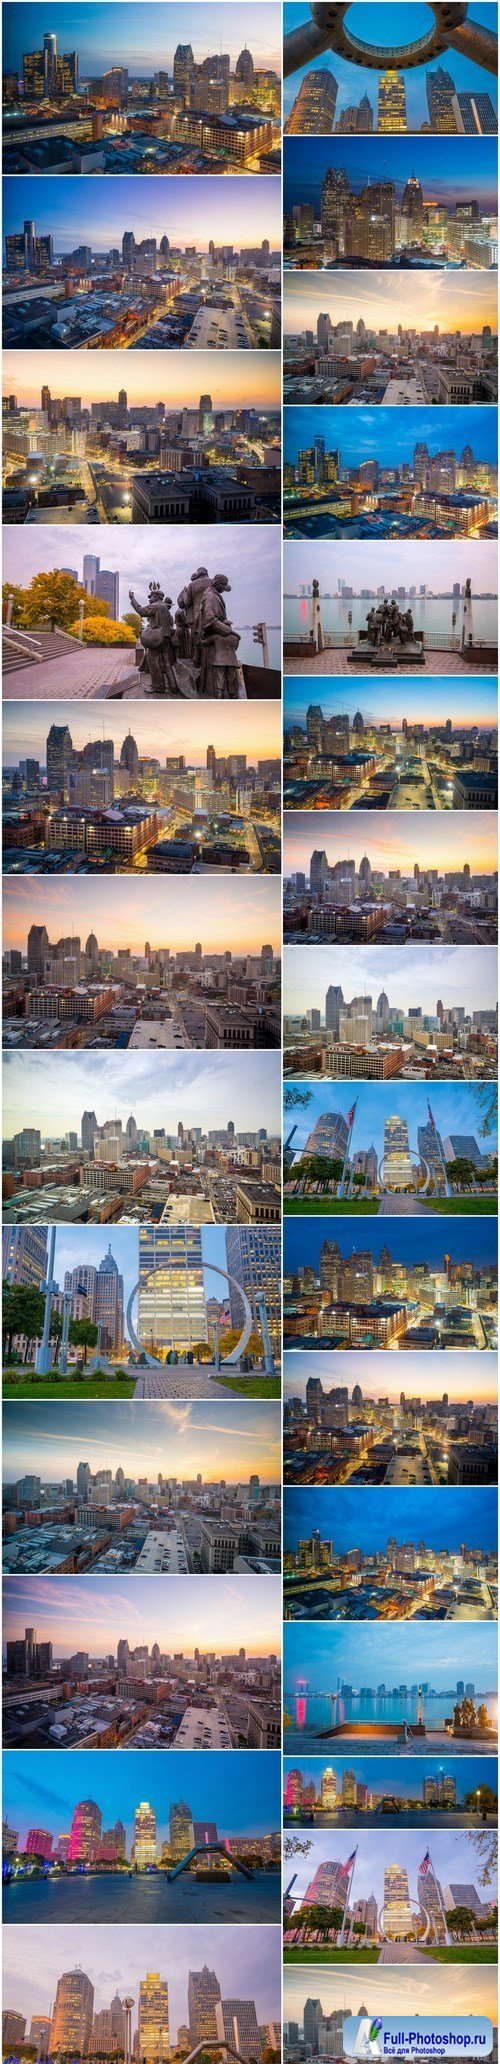 Detroit - Cities of America, - 28xUHQ JPEG Photo Stock